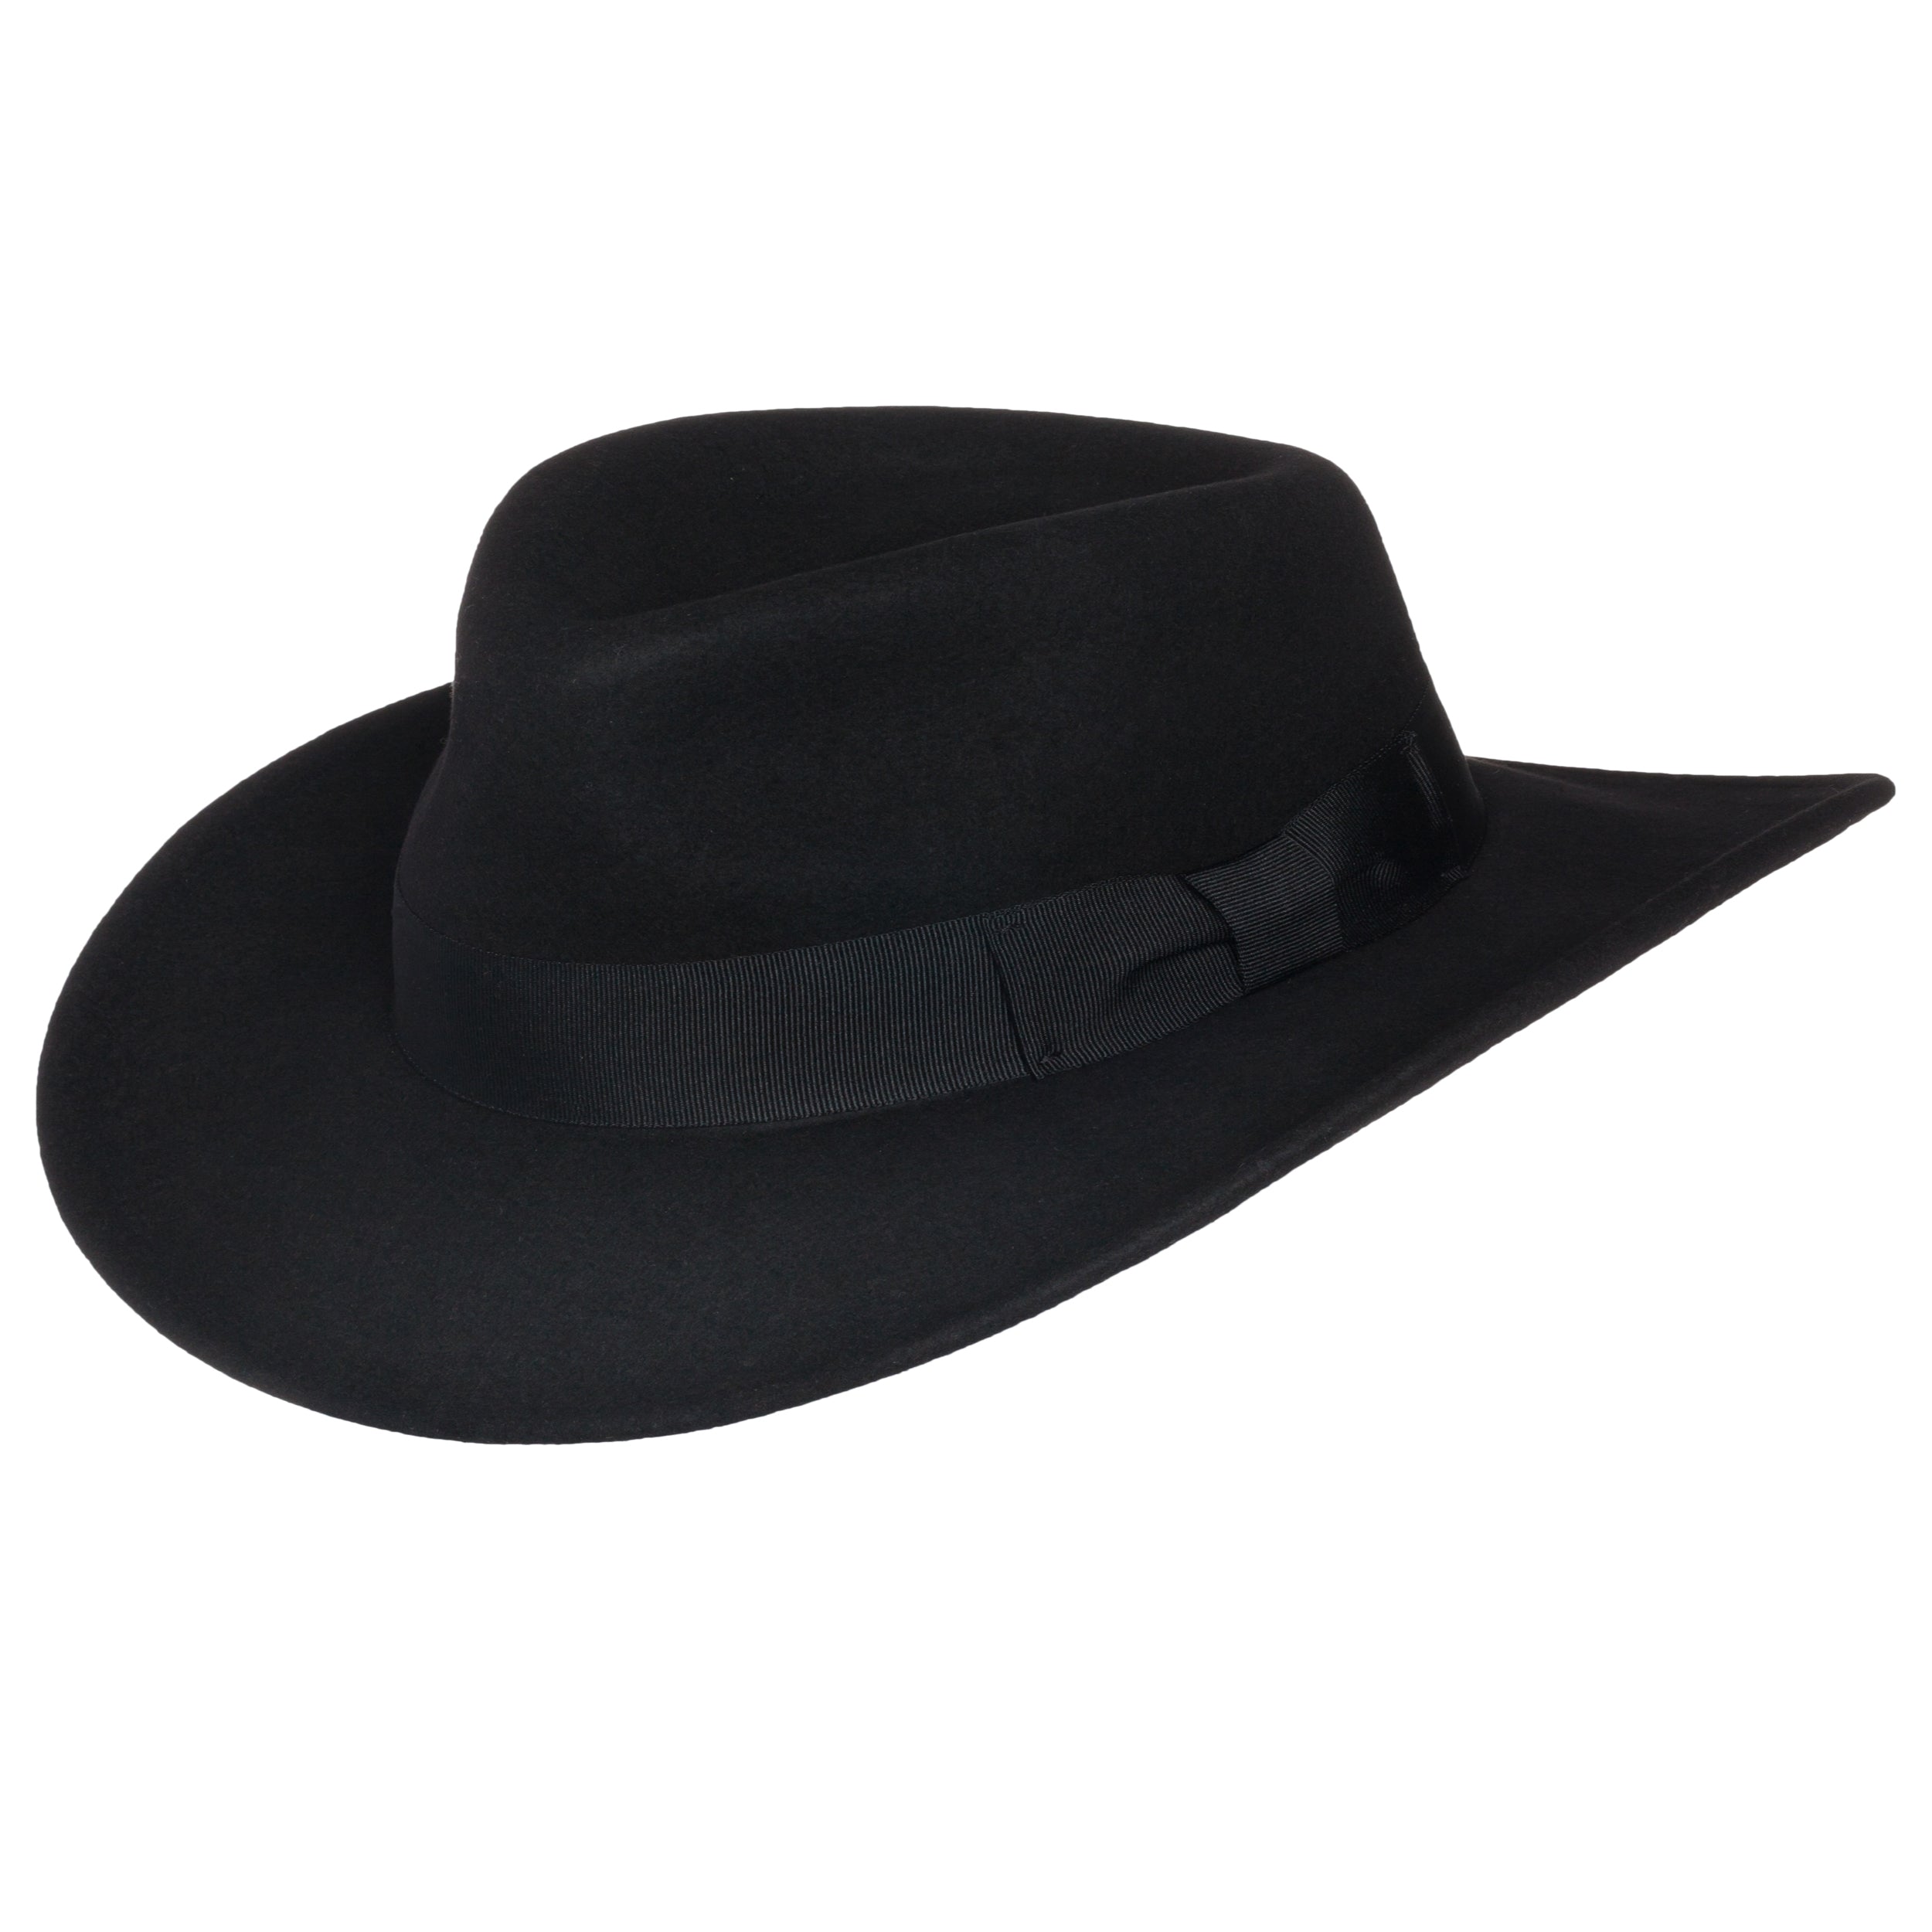 Men's Indiana Outback Fedora Hat |Black Crushable Wool Felt by